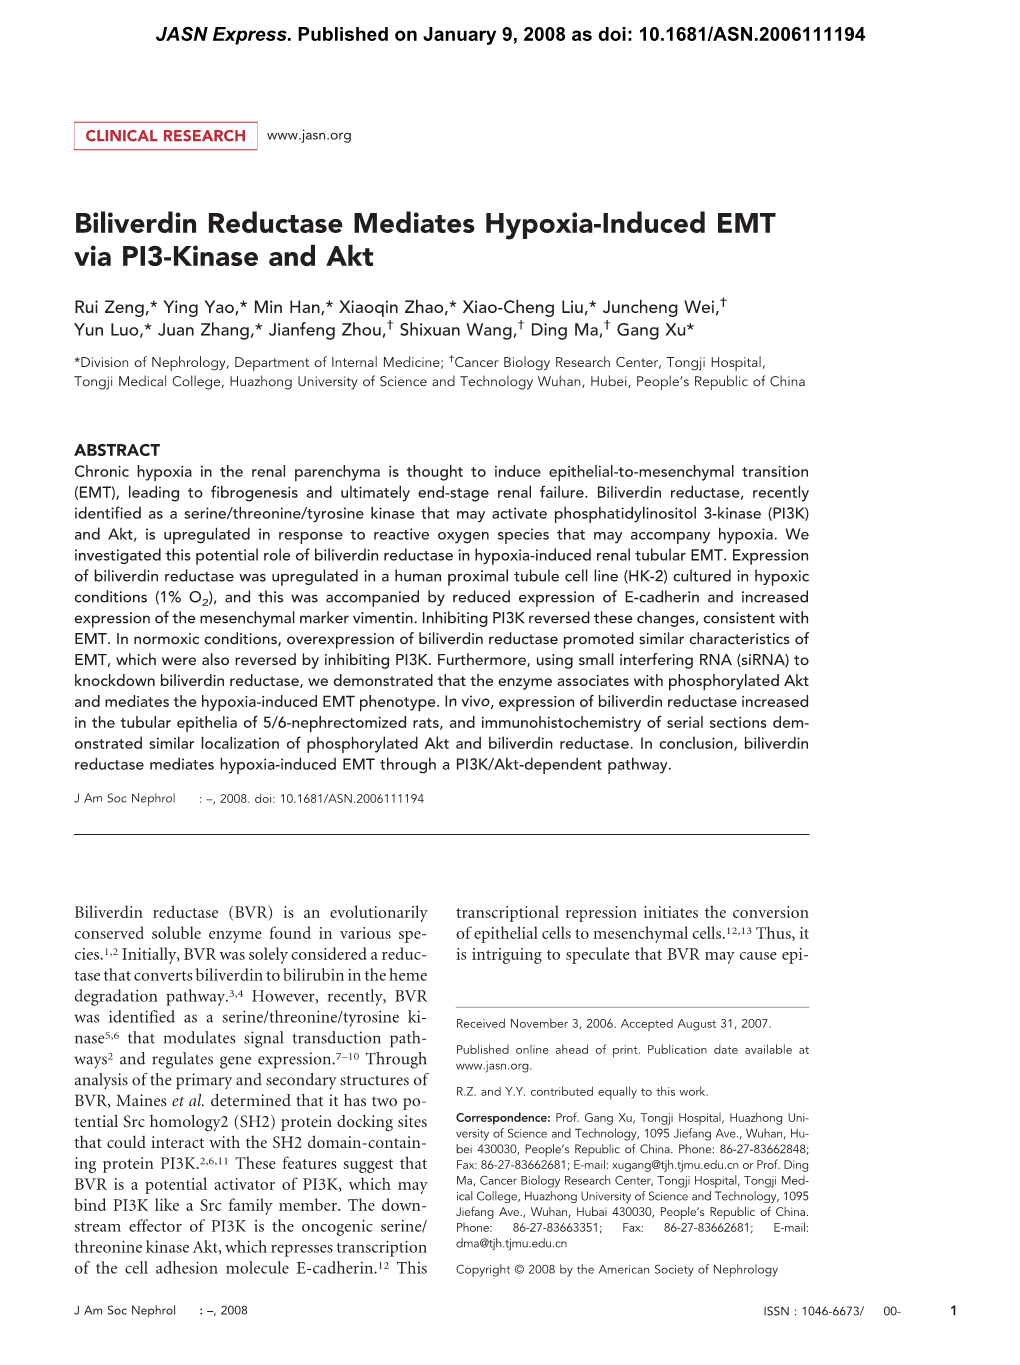 Biliverdin Reductase Mediates Hypoxia-Induced EMT Via PI3-Kinase and Akt